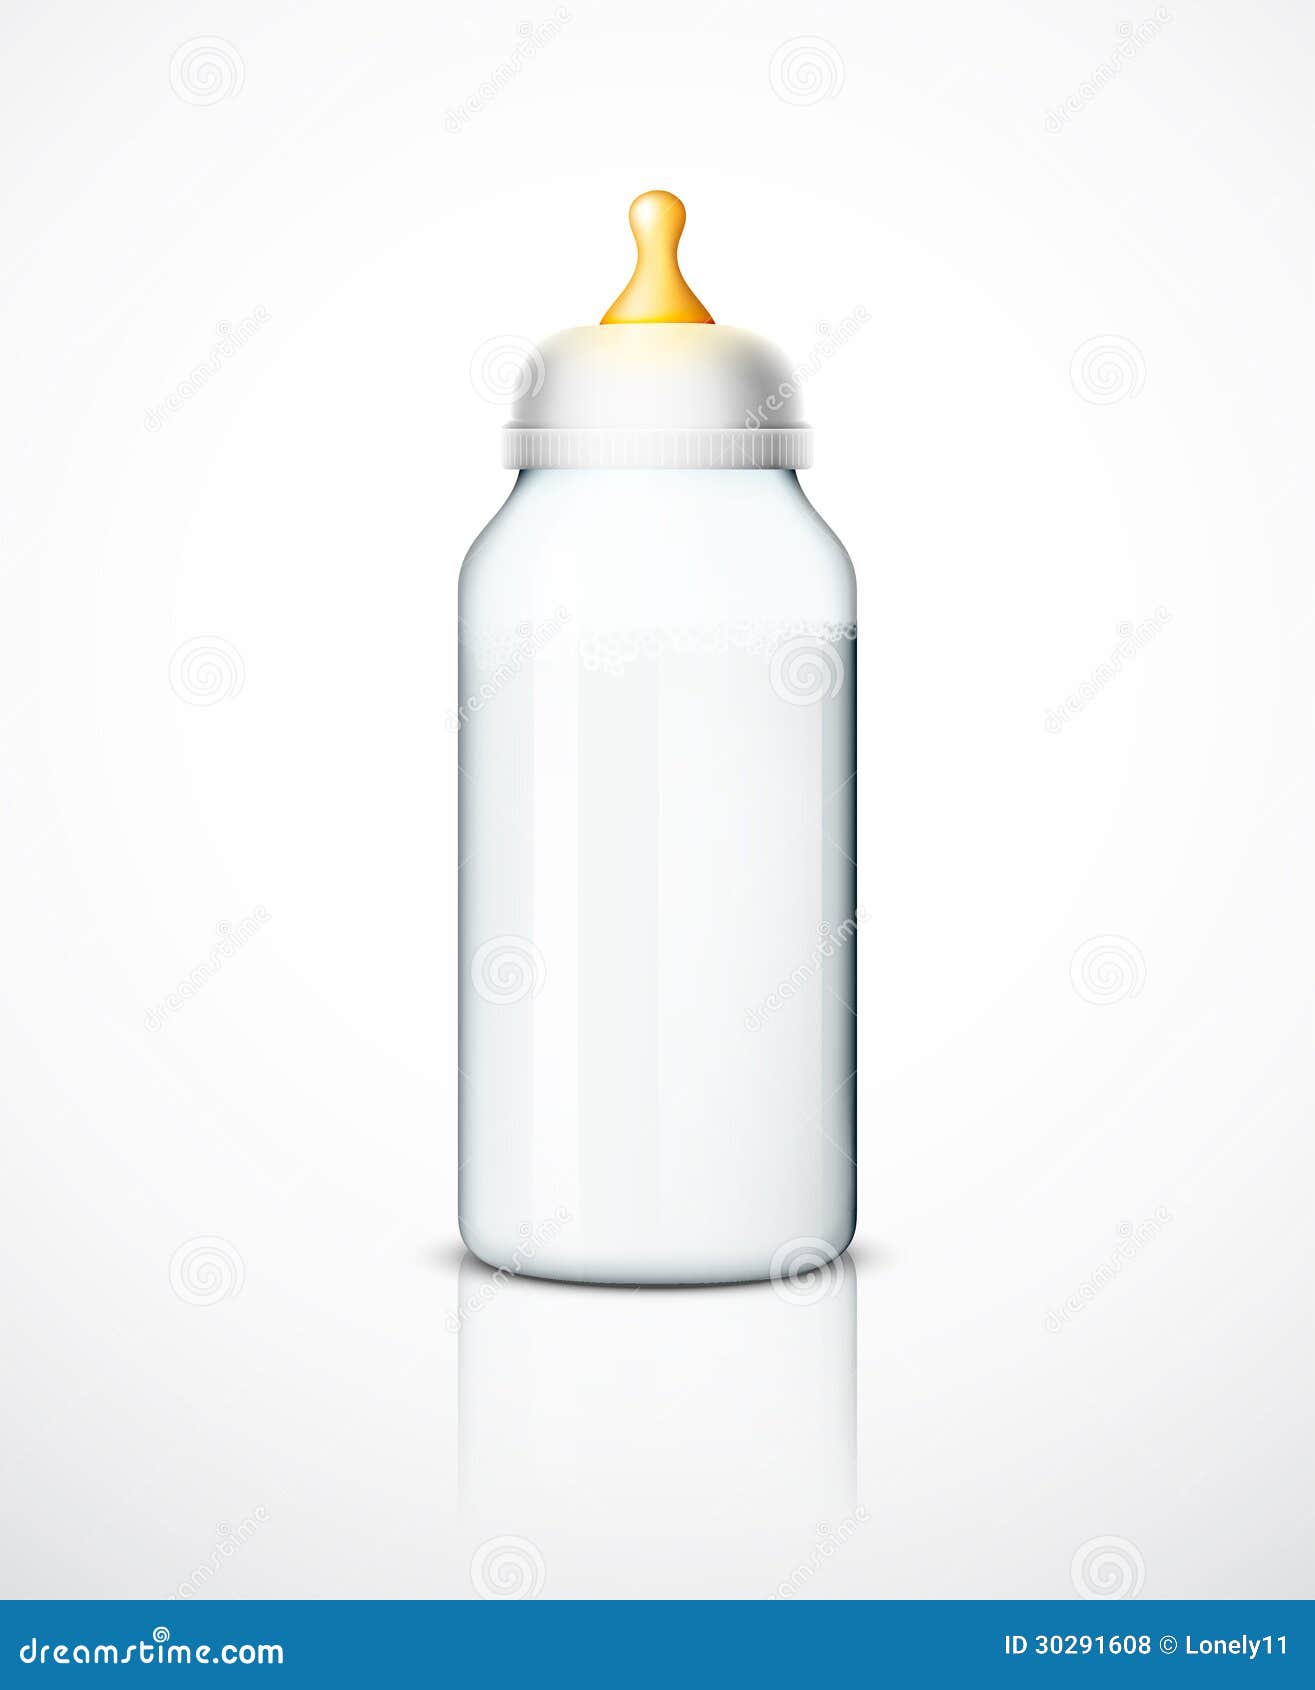 milk bottle with nipple